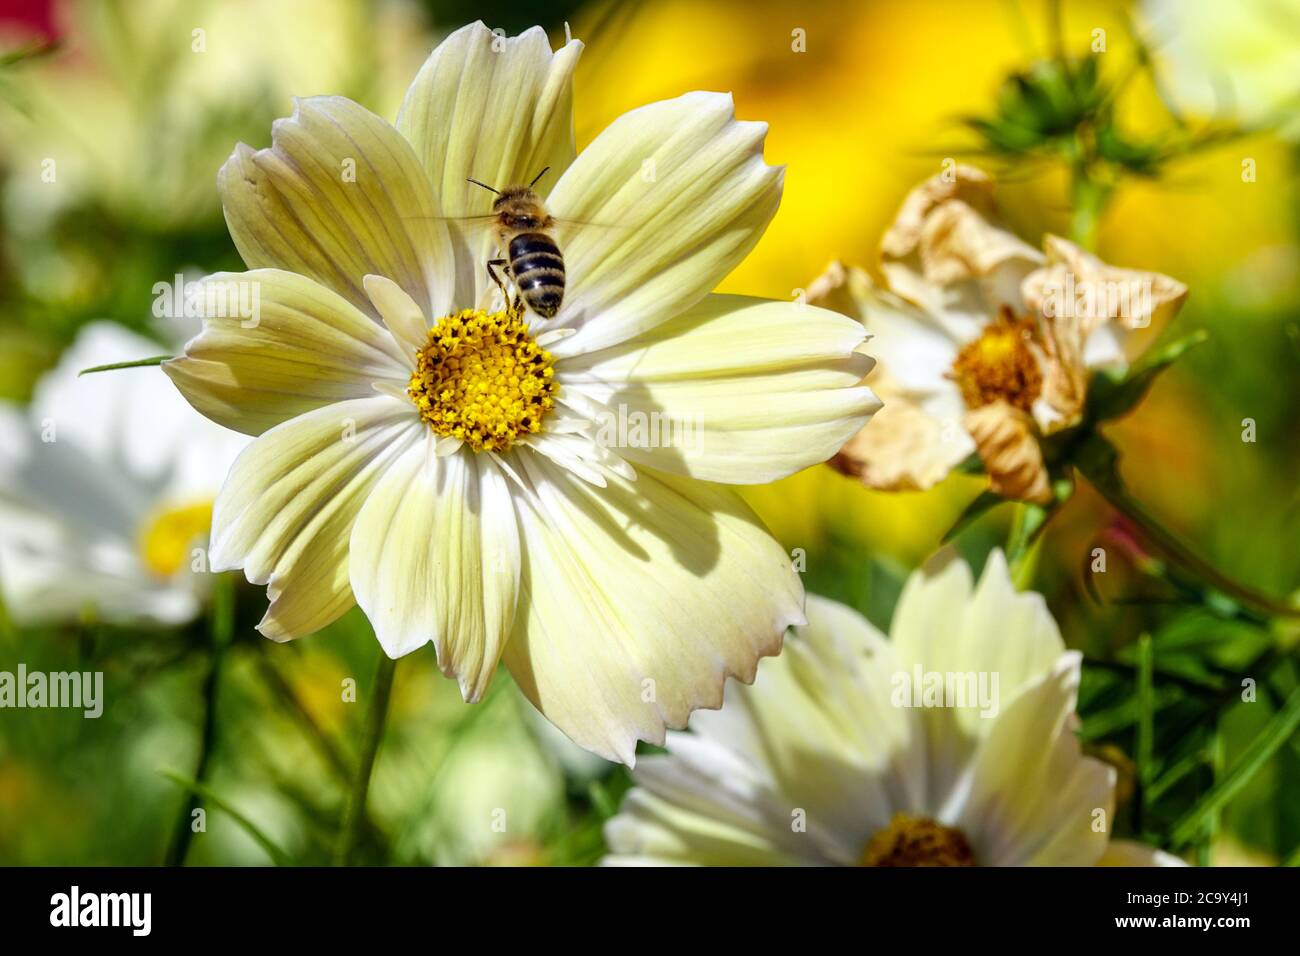 Jaune Cosmos Xanthos Cosmos abeille volant sur Flower Cosmos bipinnatus Xanthos Cosmos annuals fleurs insecte Flying Bloom Common Cosmos Xantos abeille au miel Banque D'Images